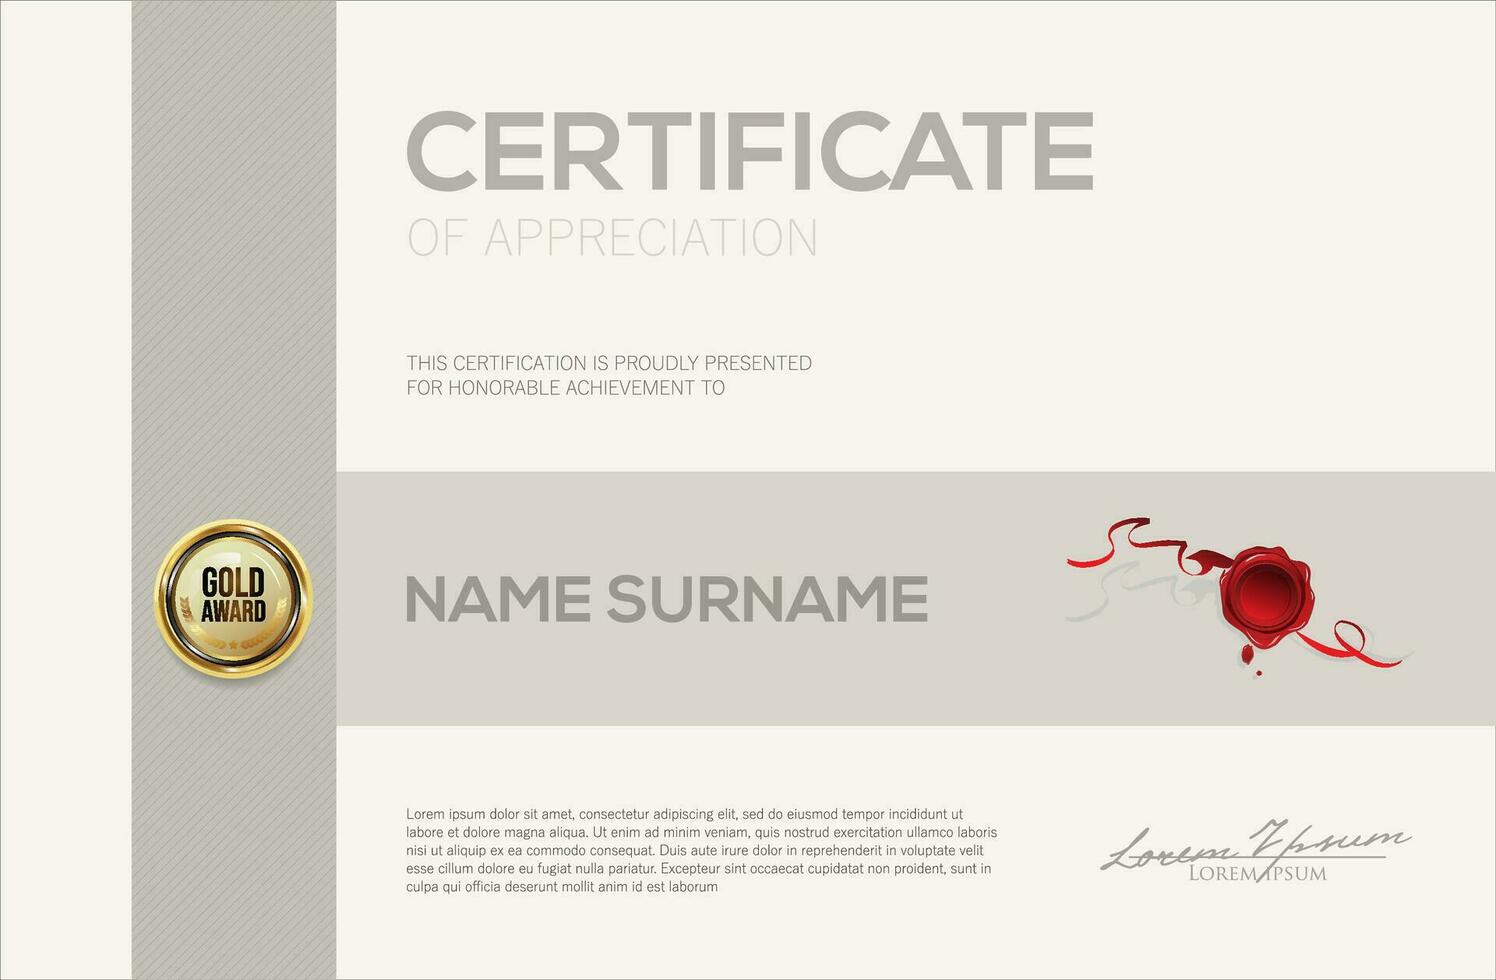 Certificate or diploma retro design template vector illustration